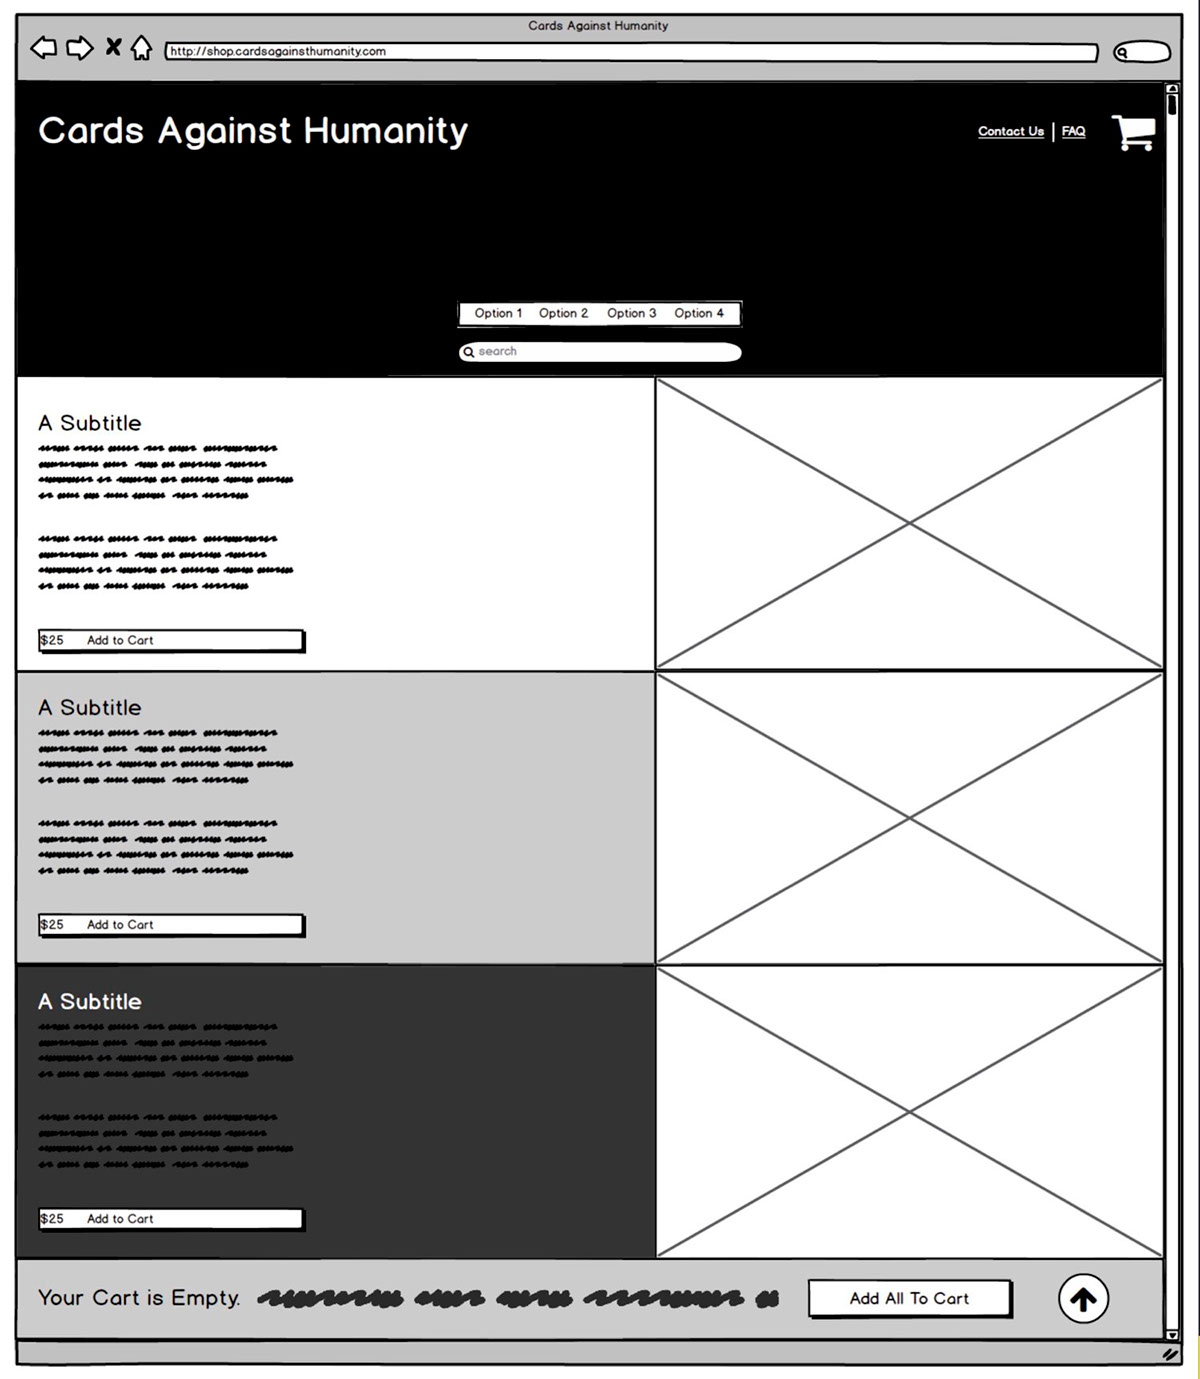 cah Cards Against Humanity website redesign rebuild Games Gaming card games